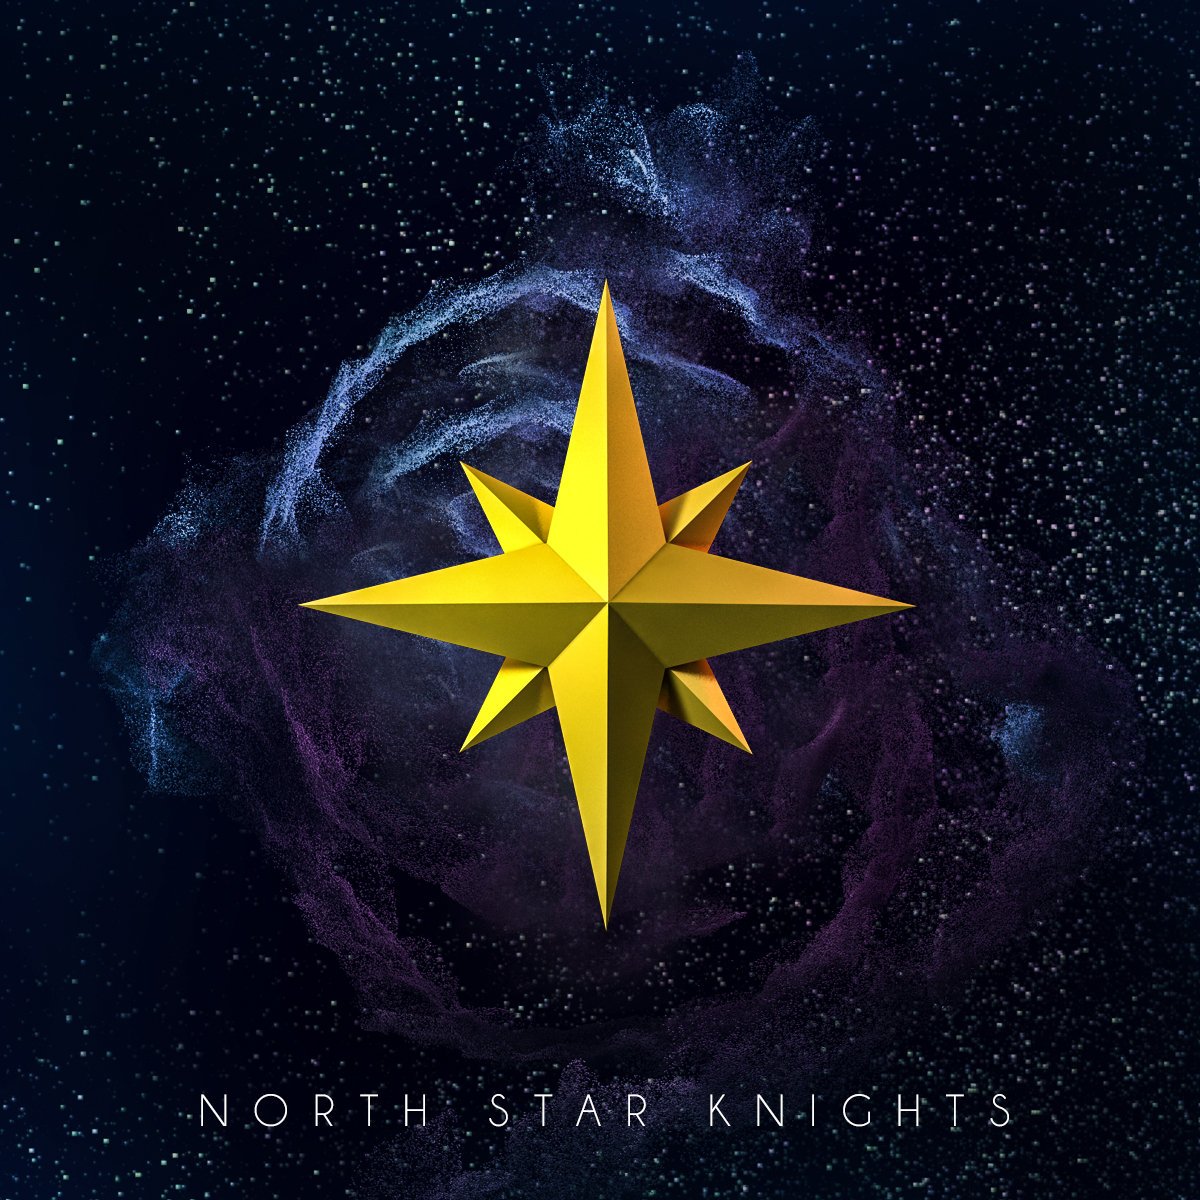 Северная звезда песня. Звезда севера. Северная звезда the North Star. Заставка звезды севера. Звезда севера картинка.